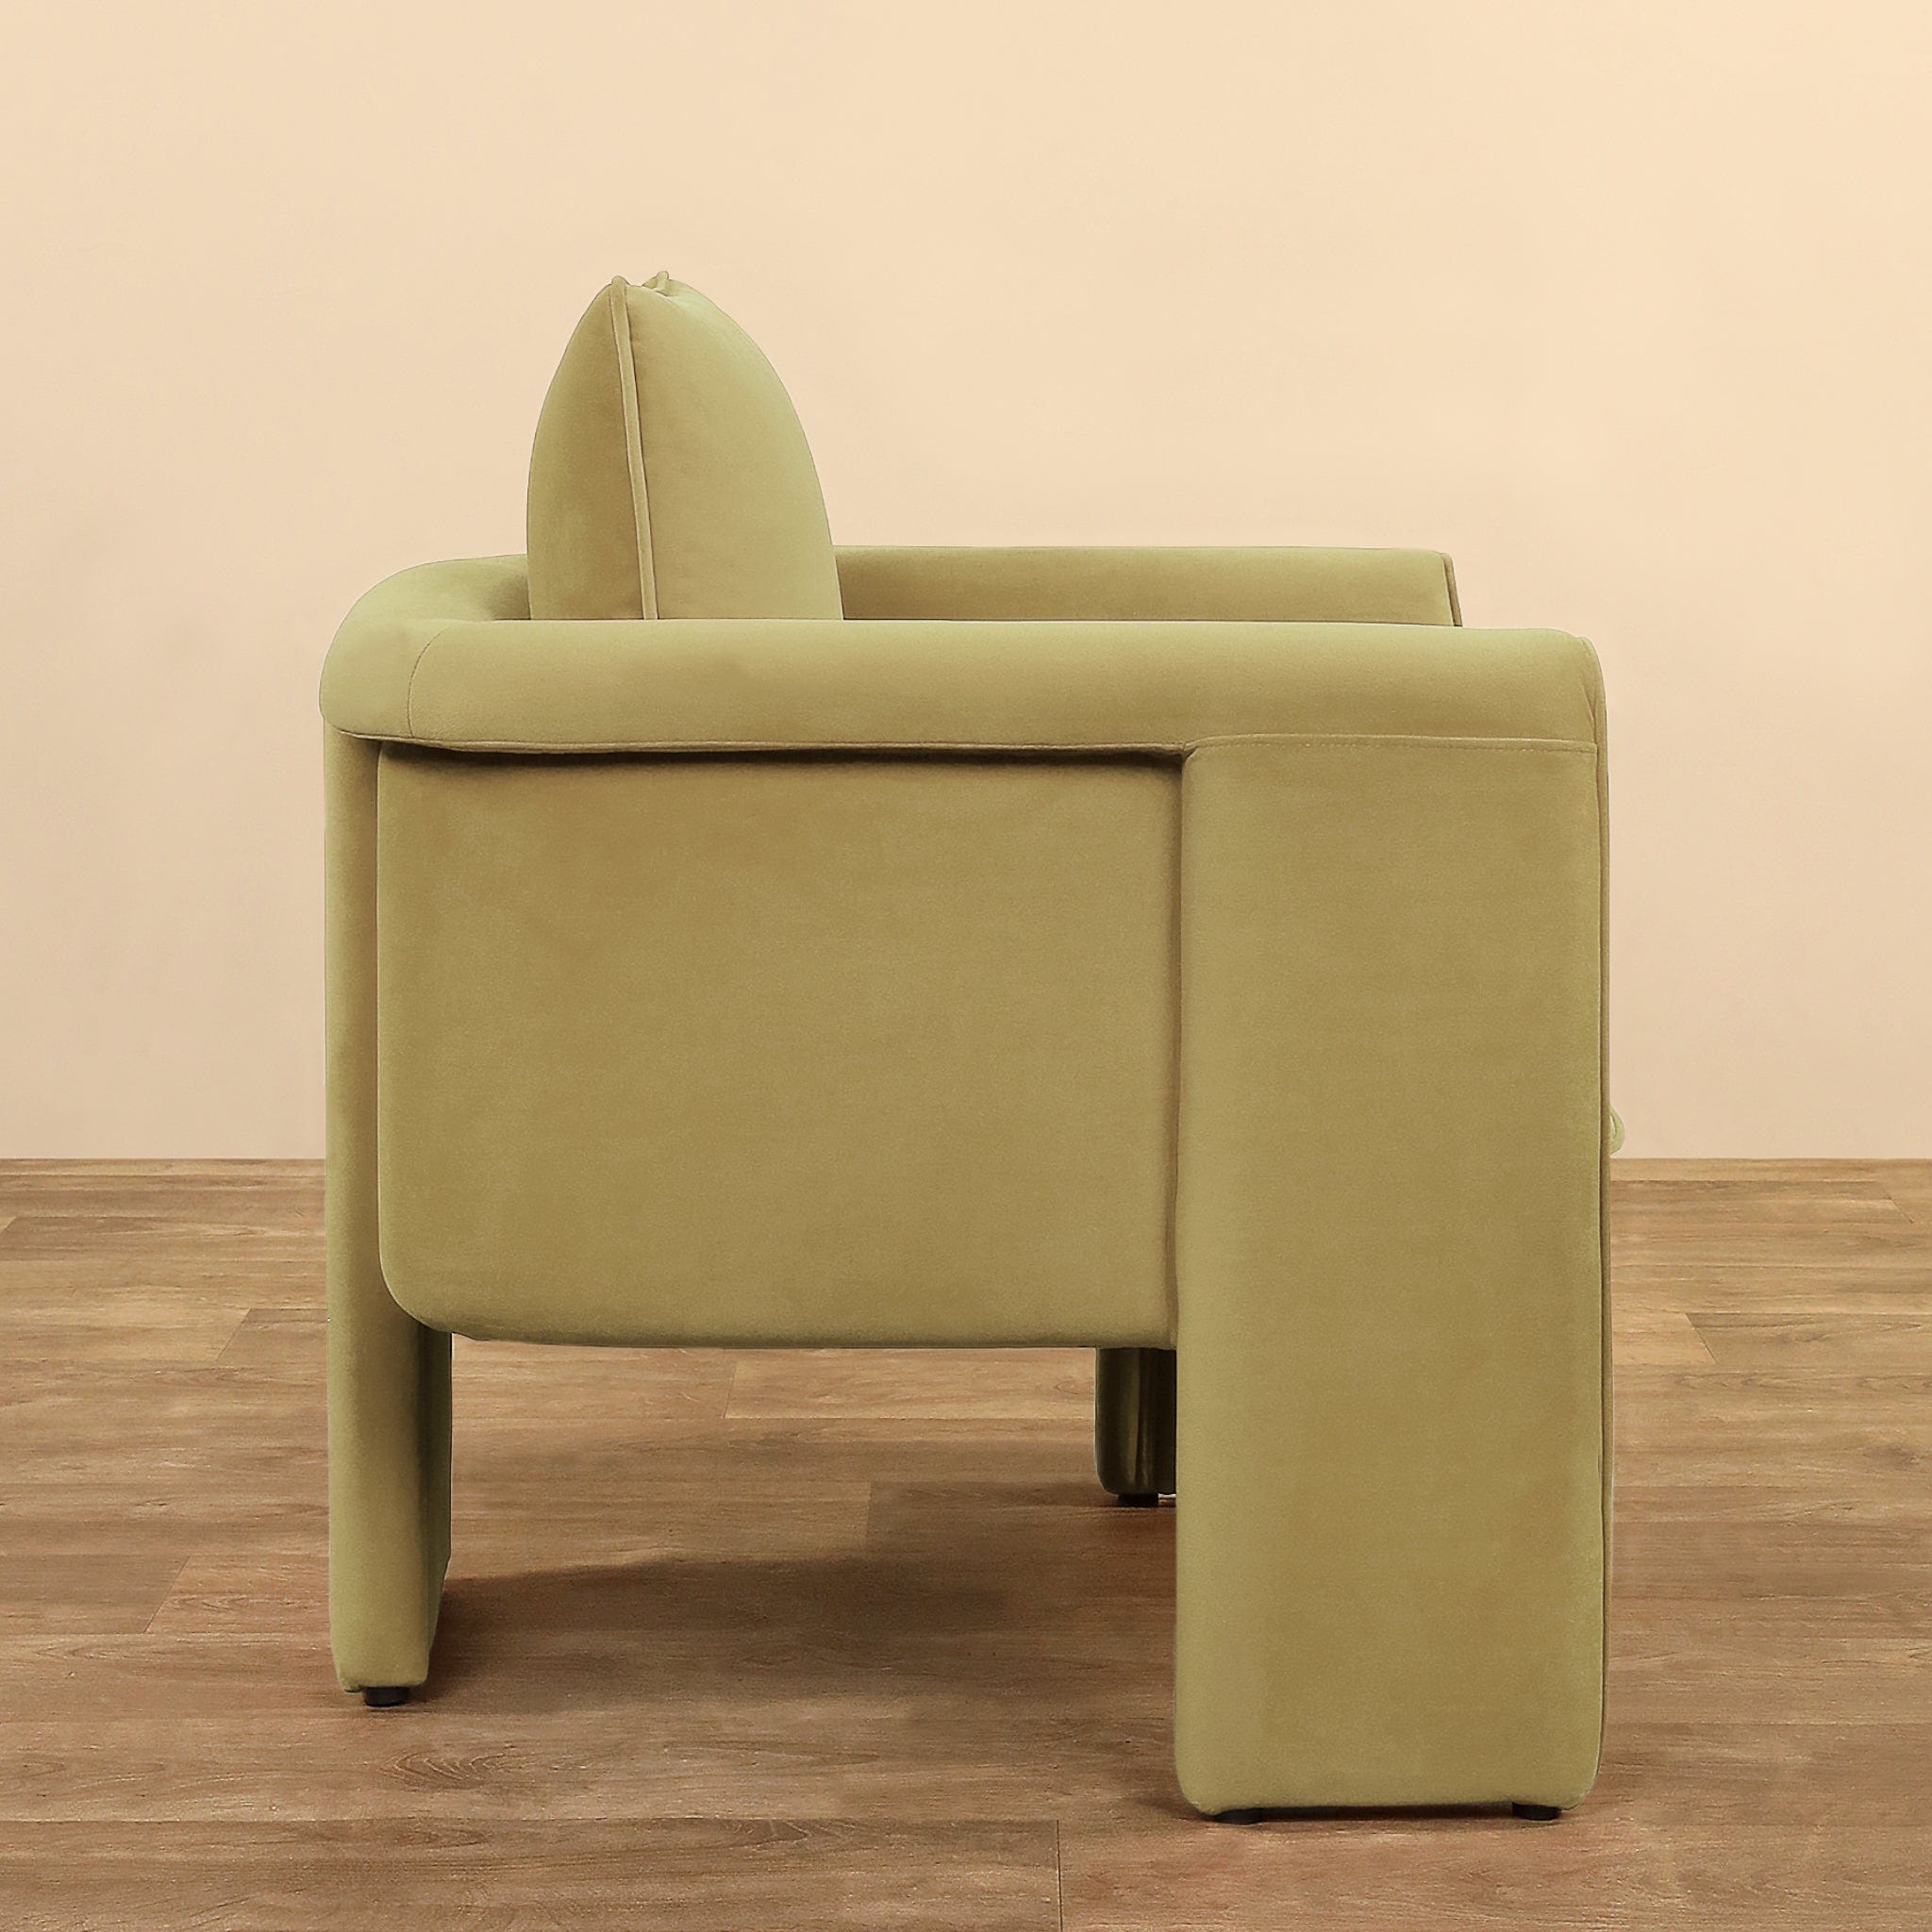 Rumi <br> Armchair Lounge Chair - Bloomr